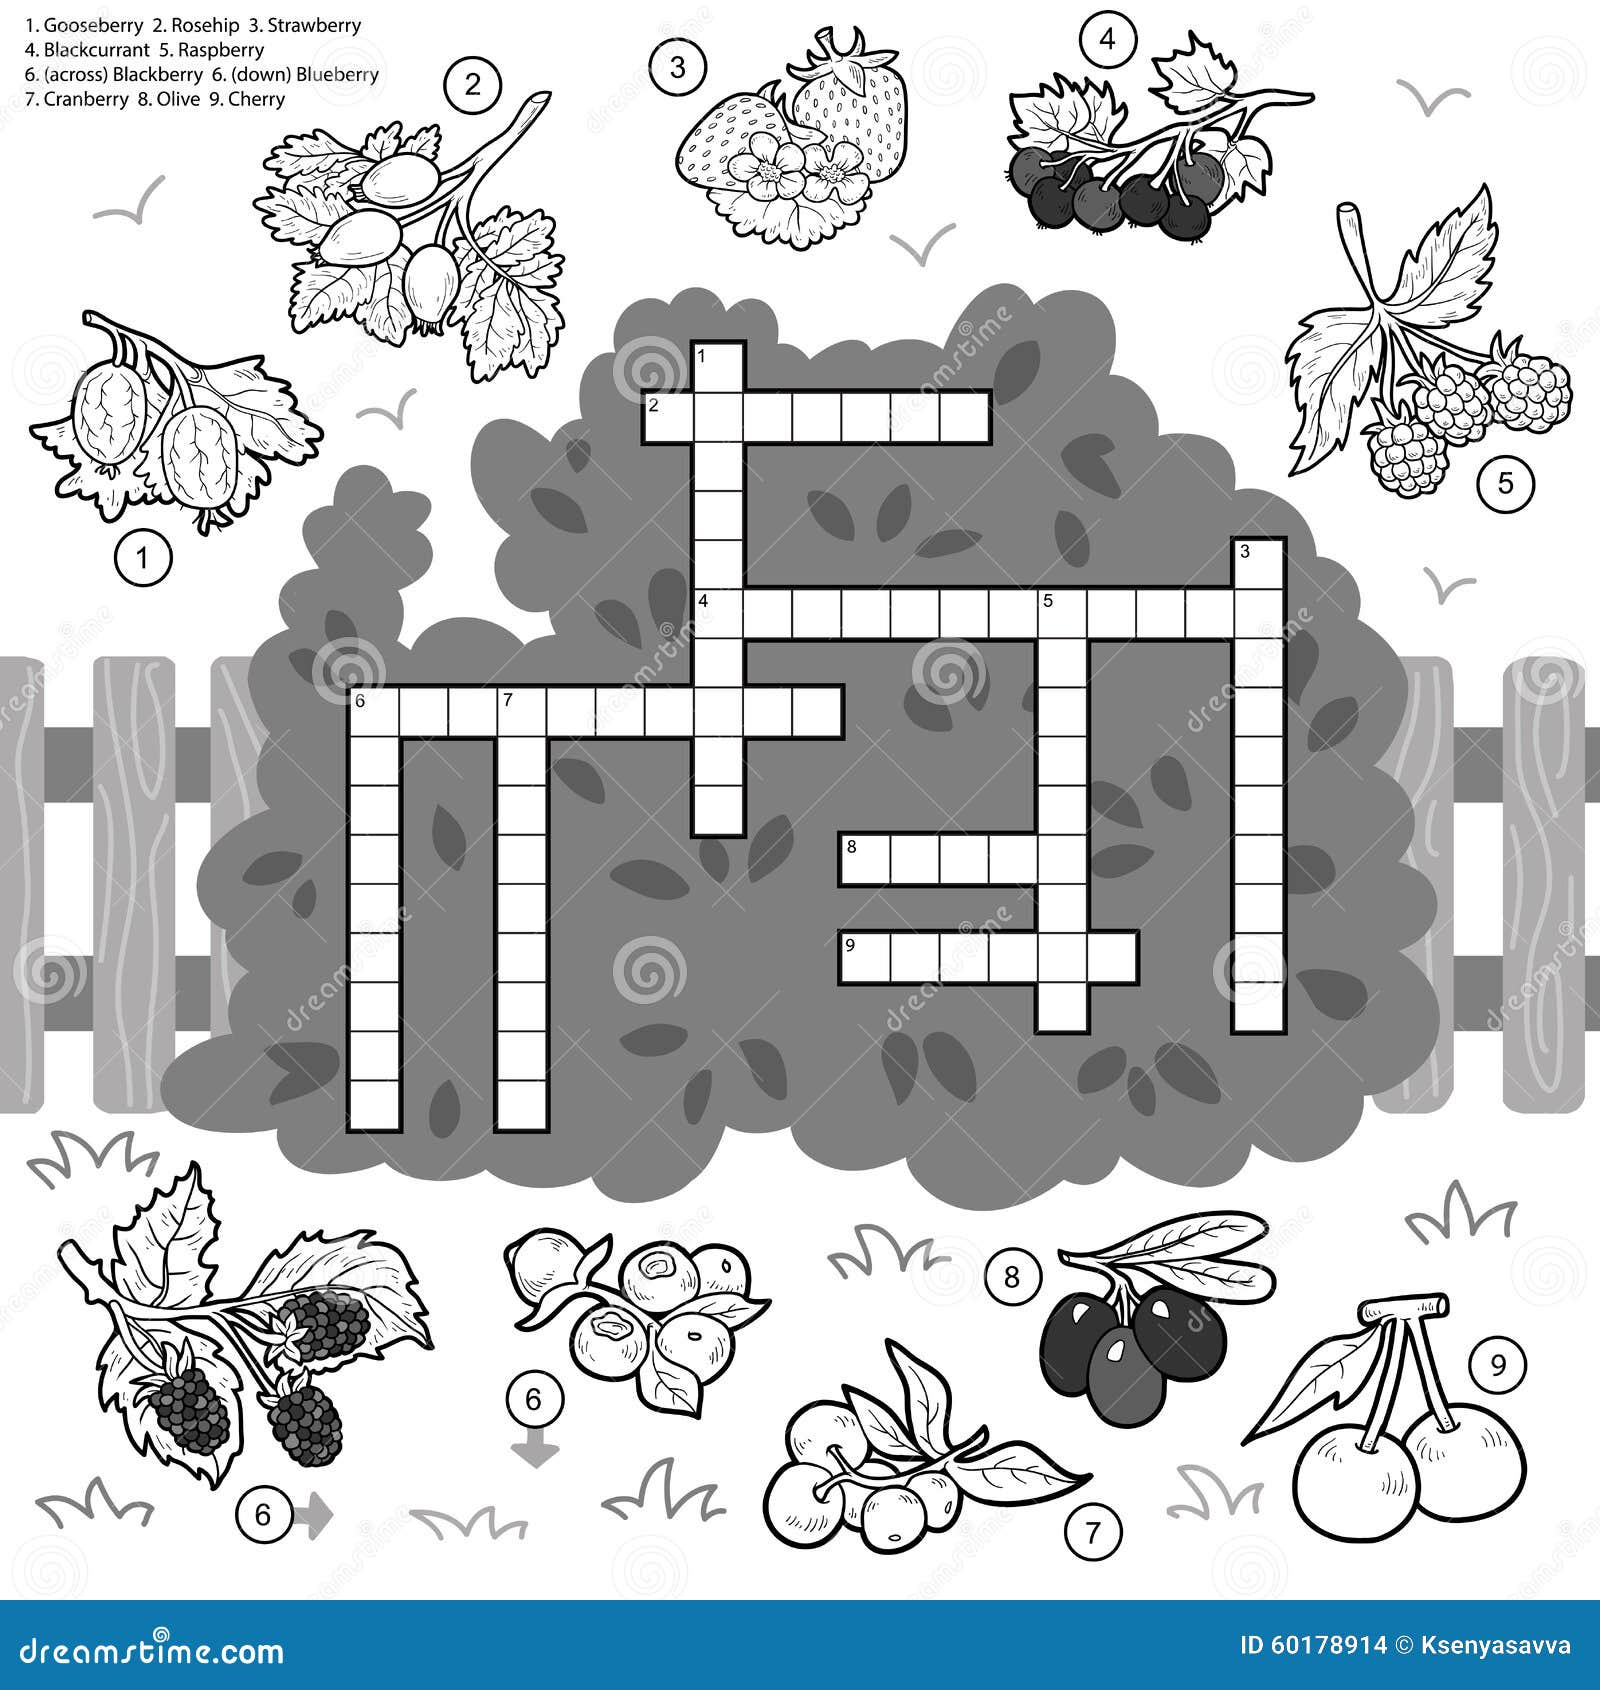 Blueberry coloring page vector folha de trabalho educacional